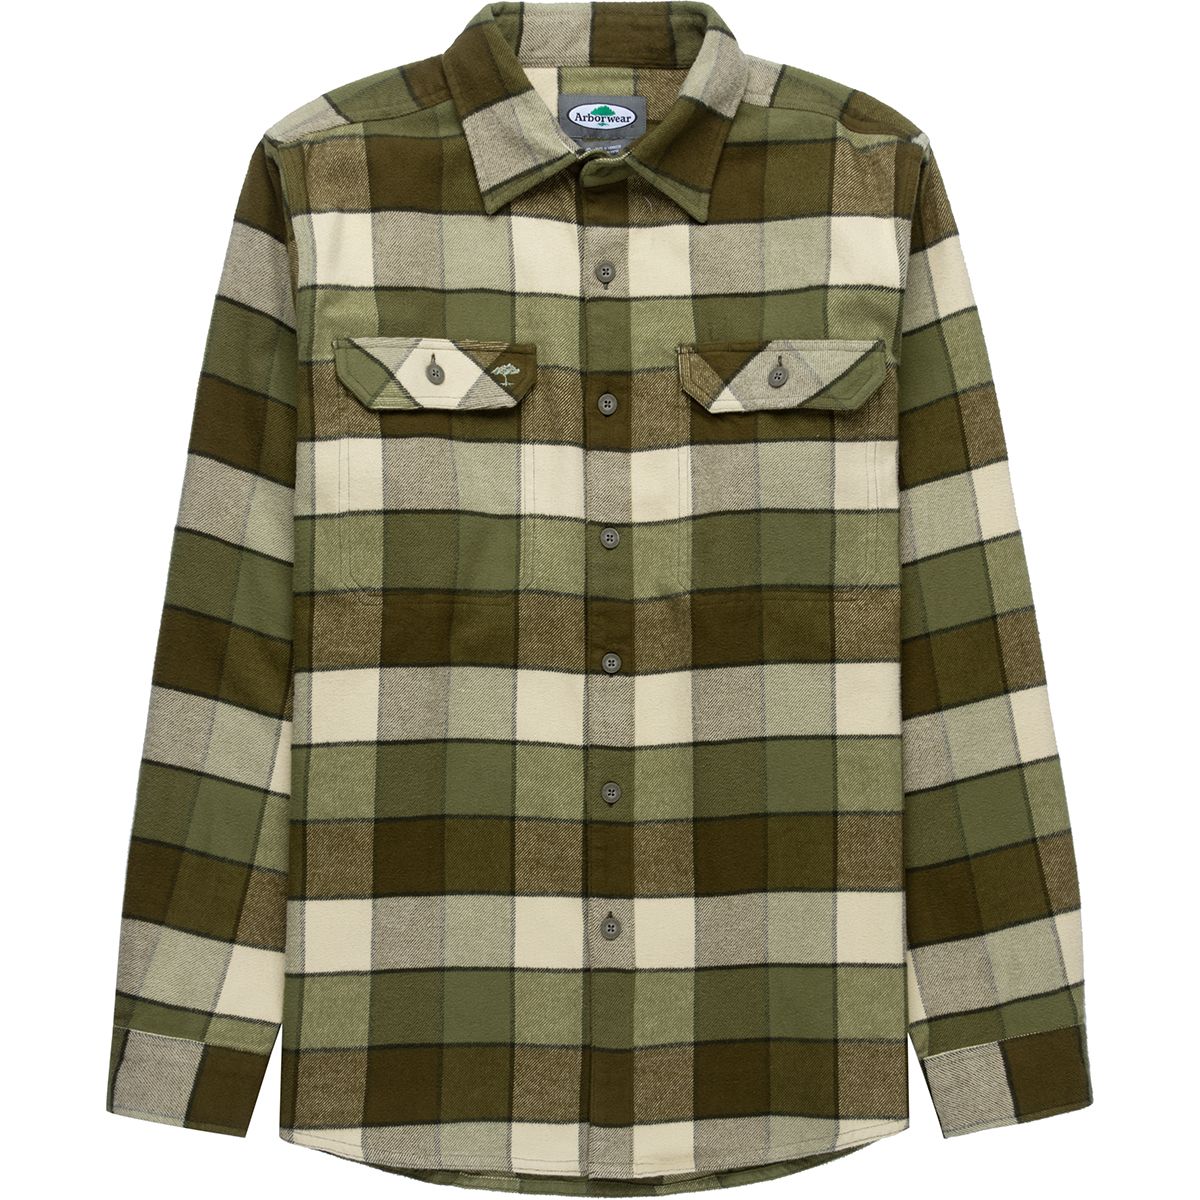 Arborwear Chagrin Flannel Shirt - Men's | Backcountry.com